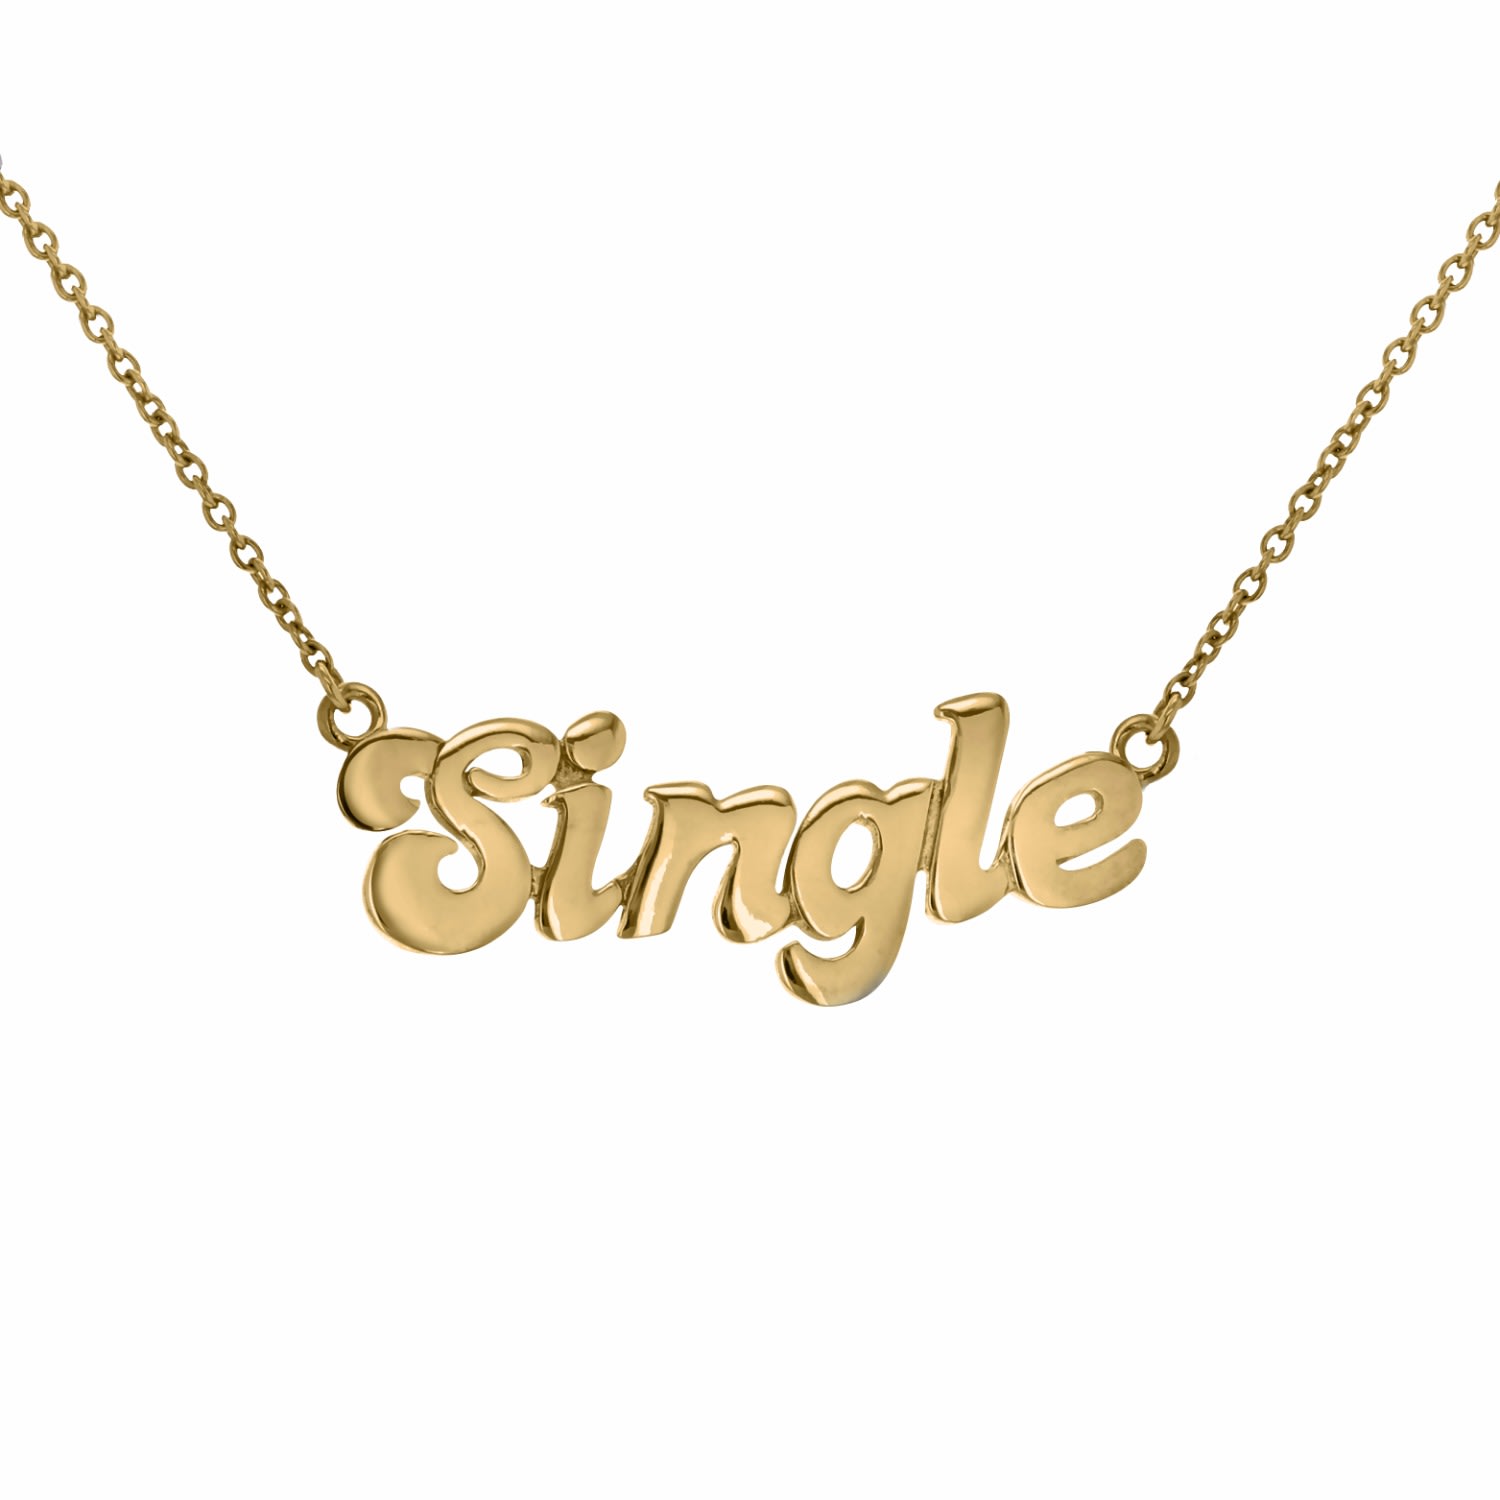 True Rocks Women's 18kt Gold Plated Single Statement Necklace